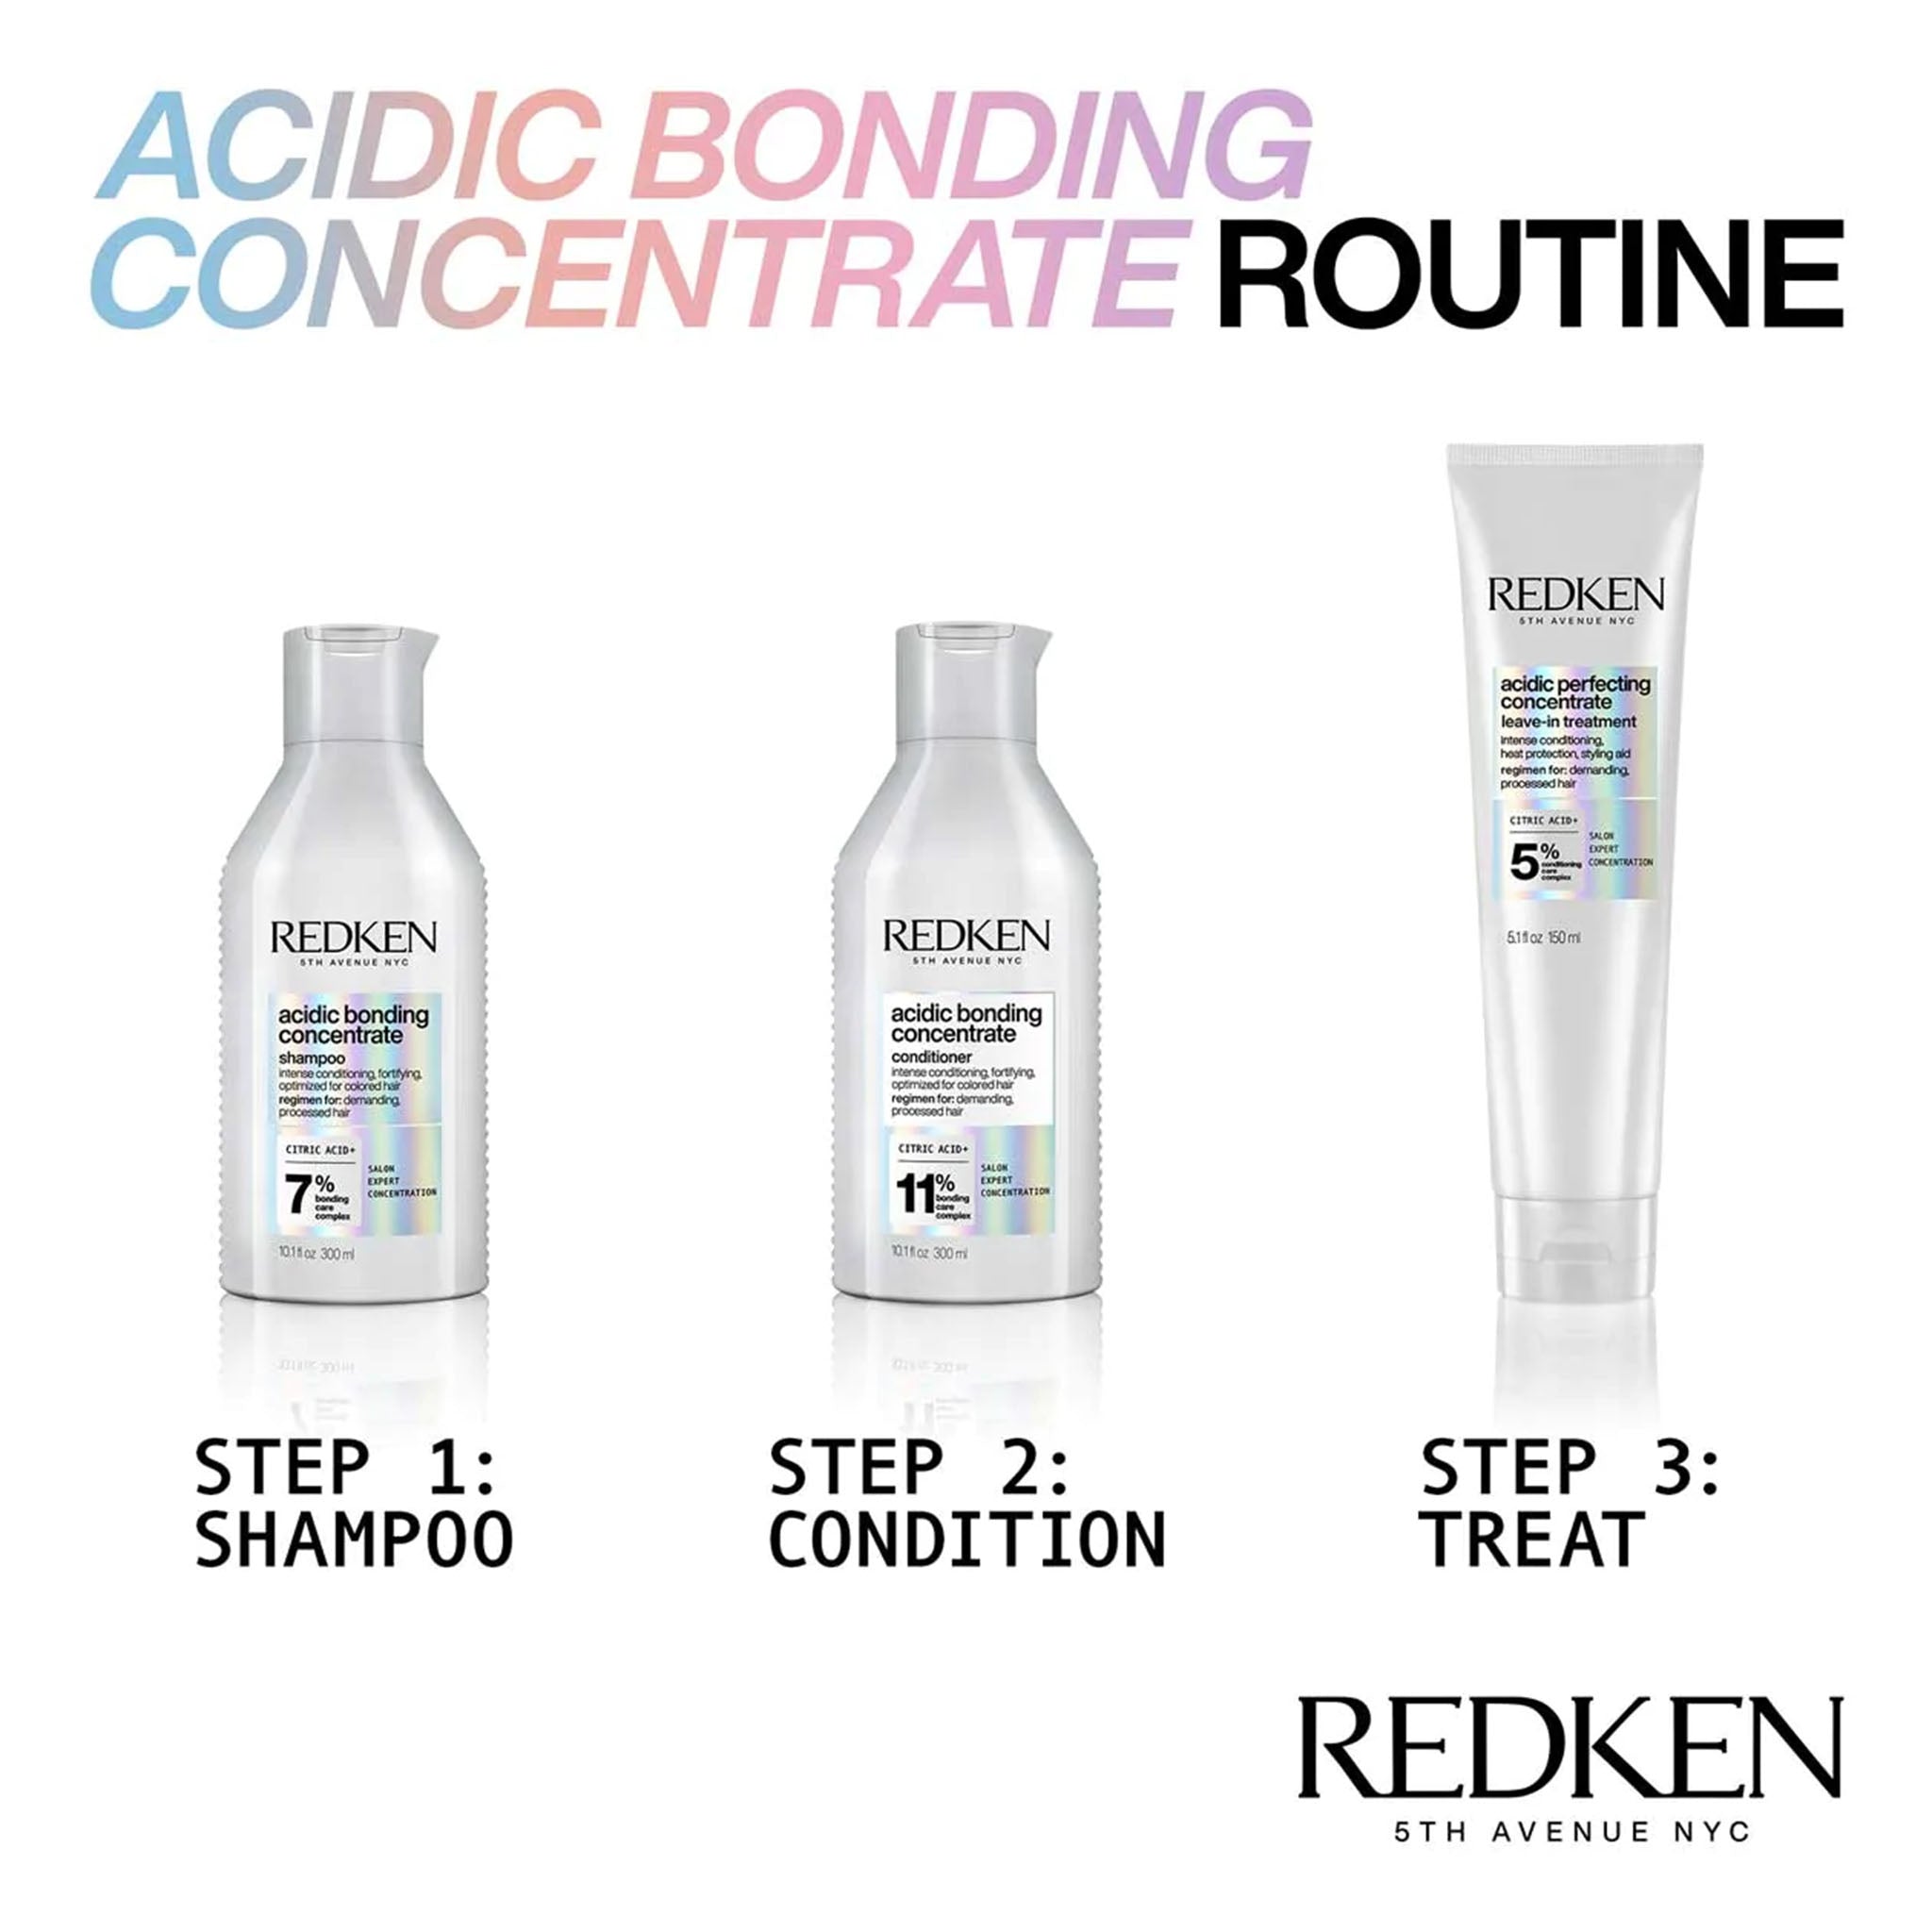 Redken. Shampoing Acidic Bonding Concentrate 7% - 300ml - Concept C. Shop